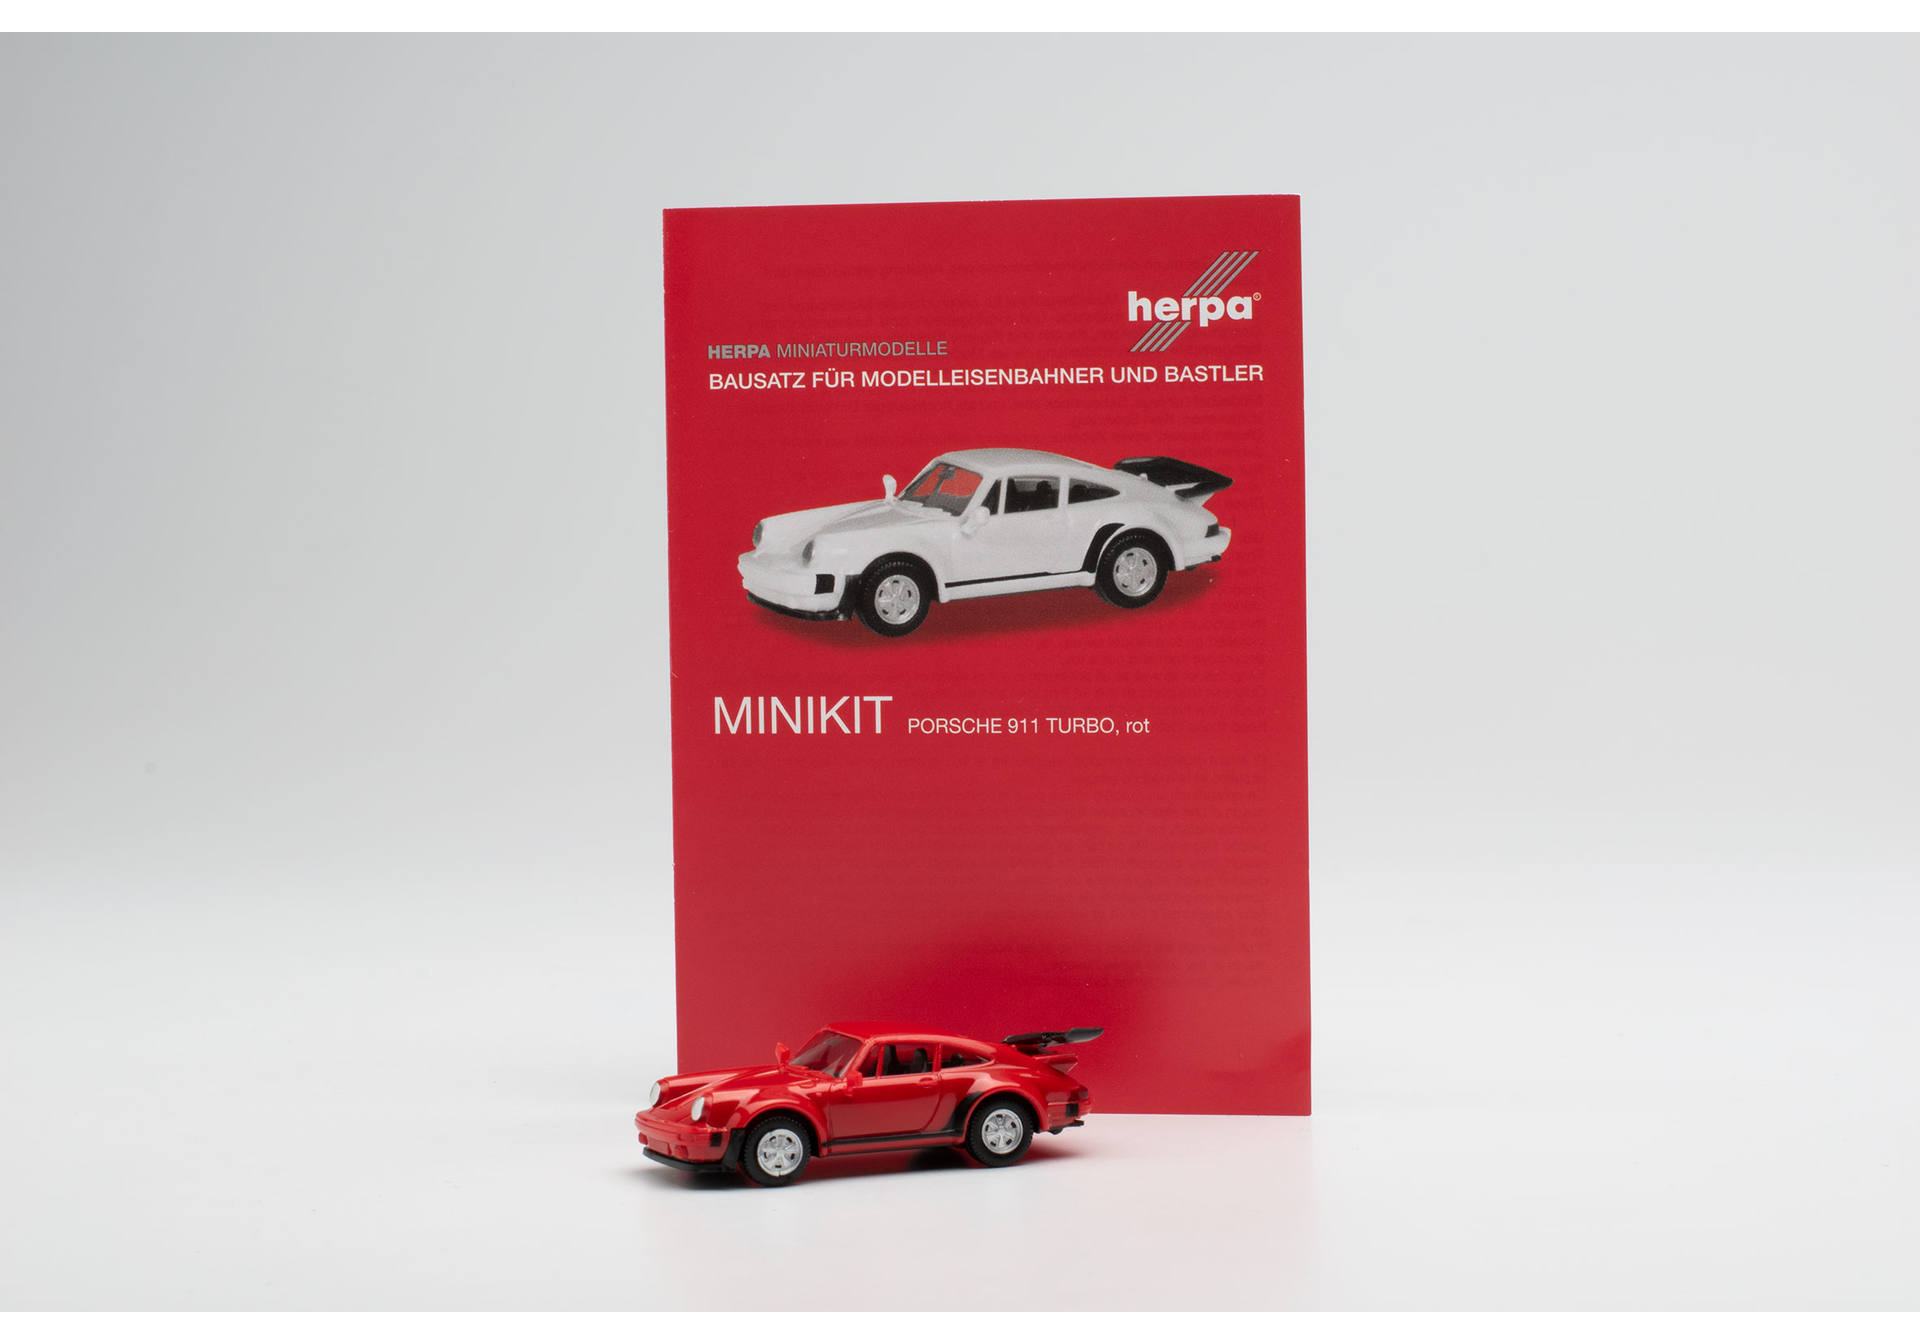 Minikit Porsche 911 Turbo, red